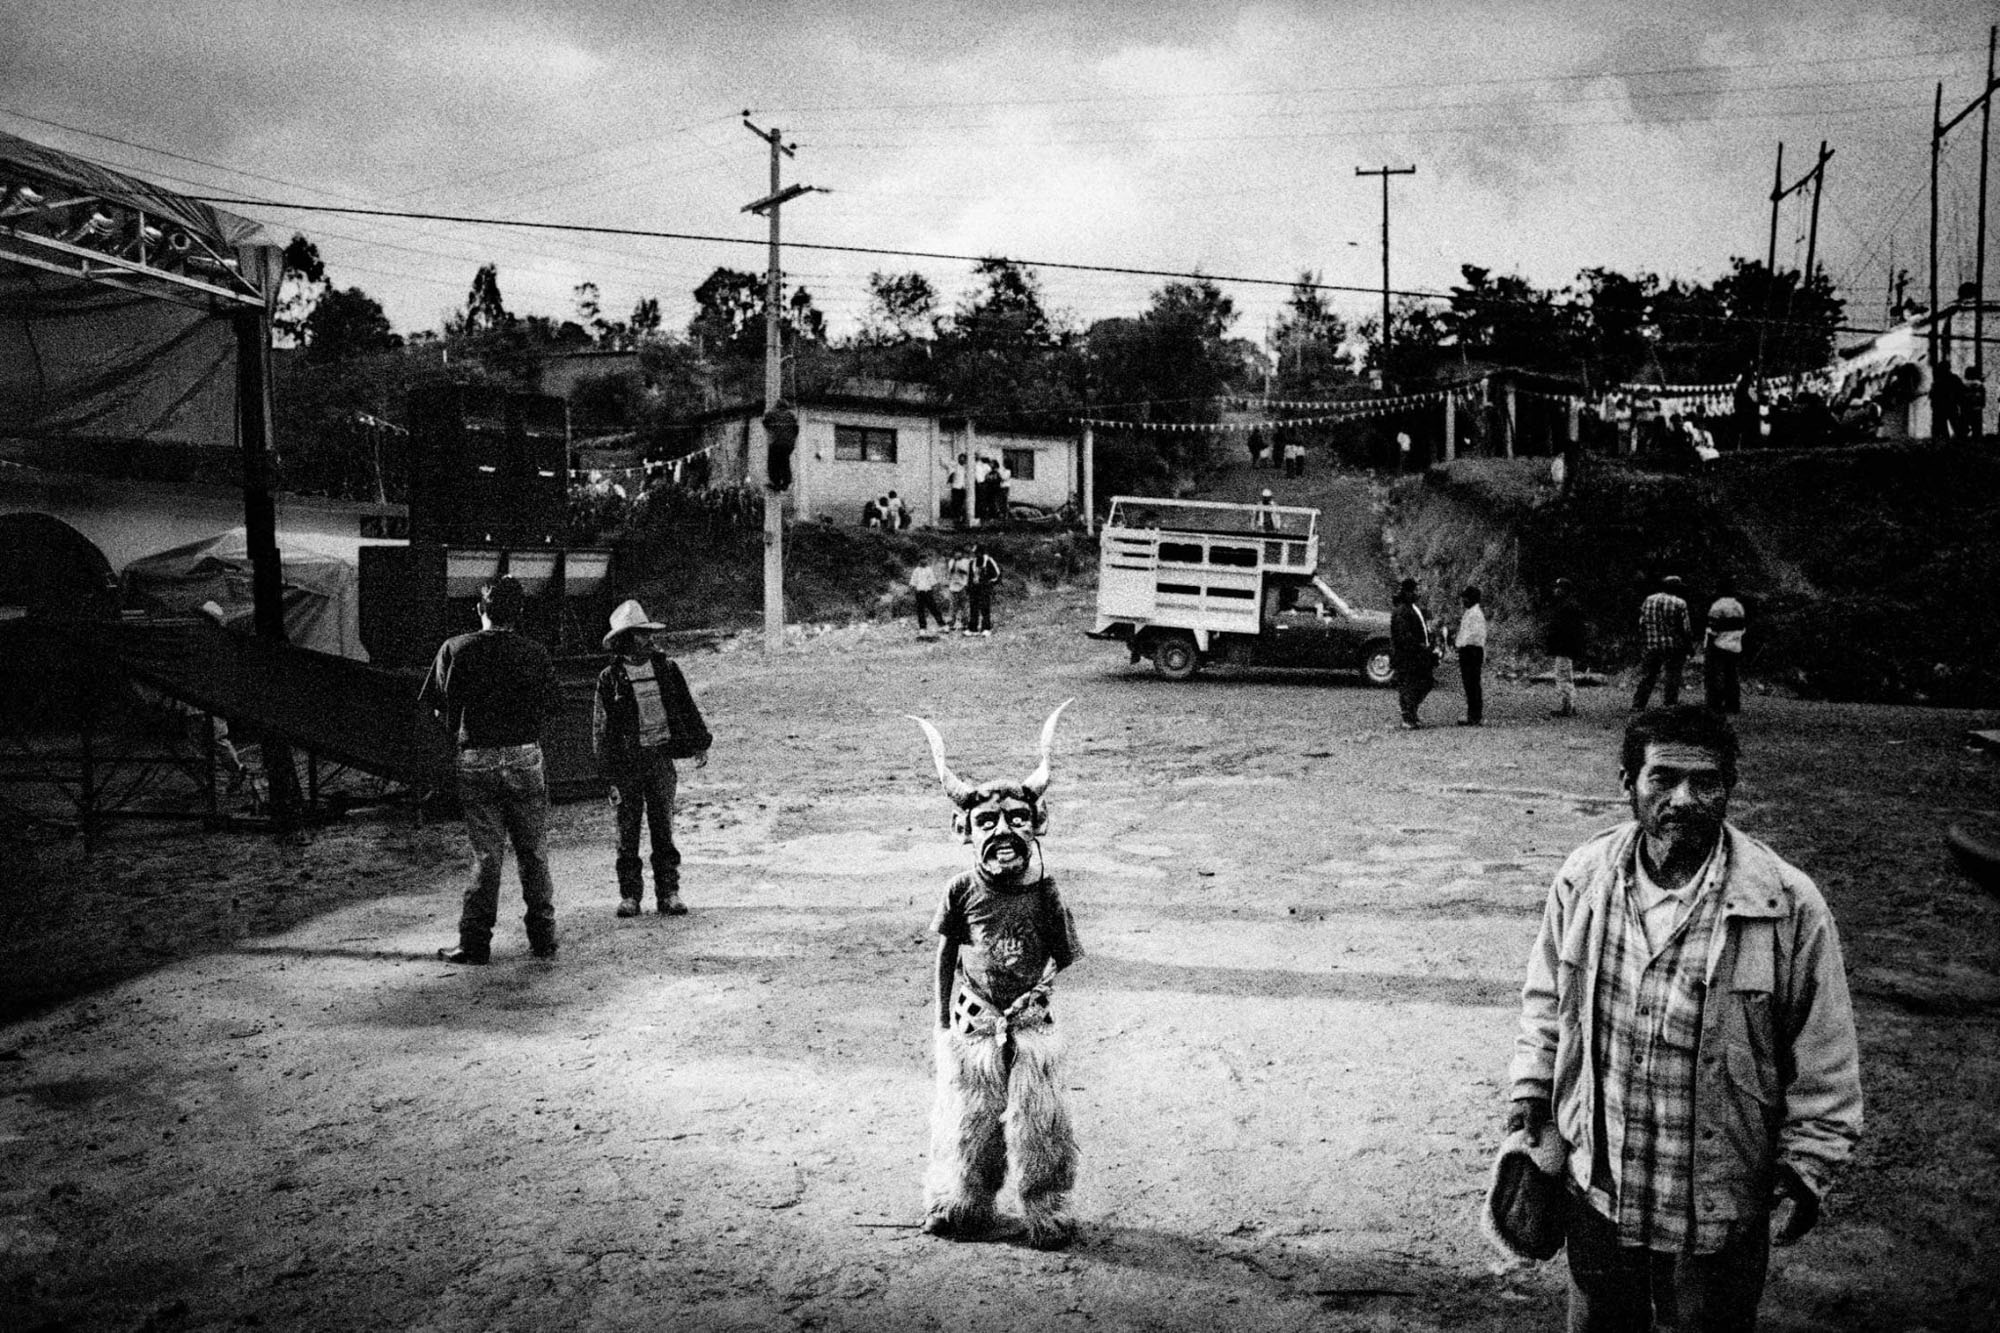 San Pedro Chayuco, Oaxaca. 2000. Saint